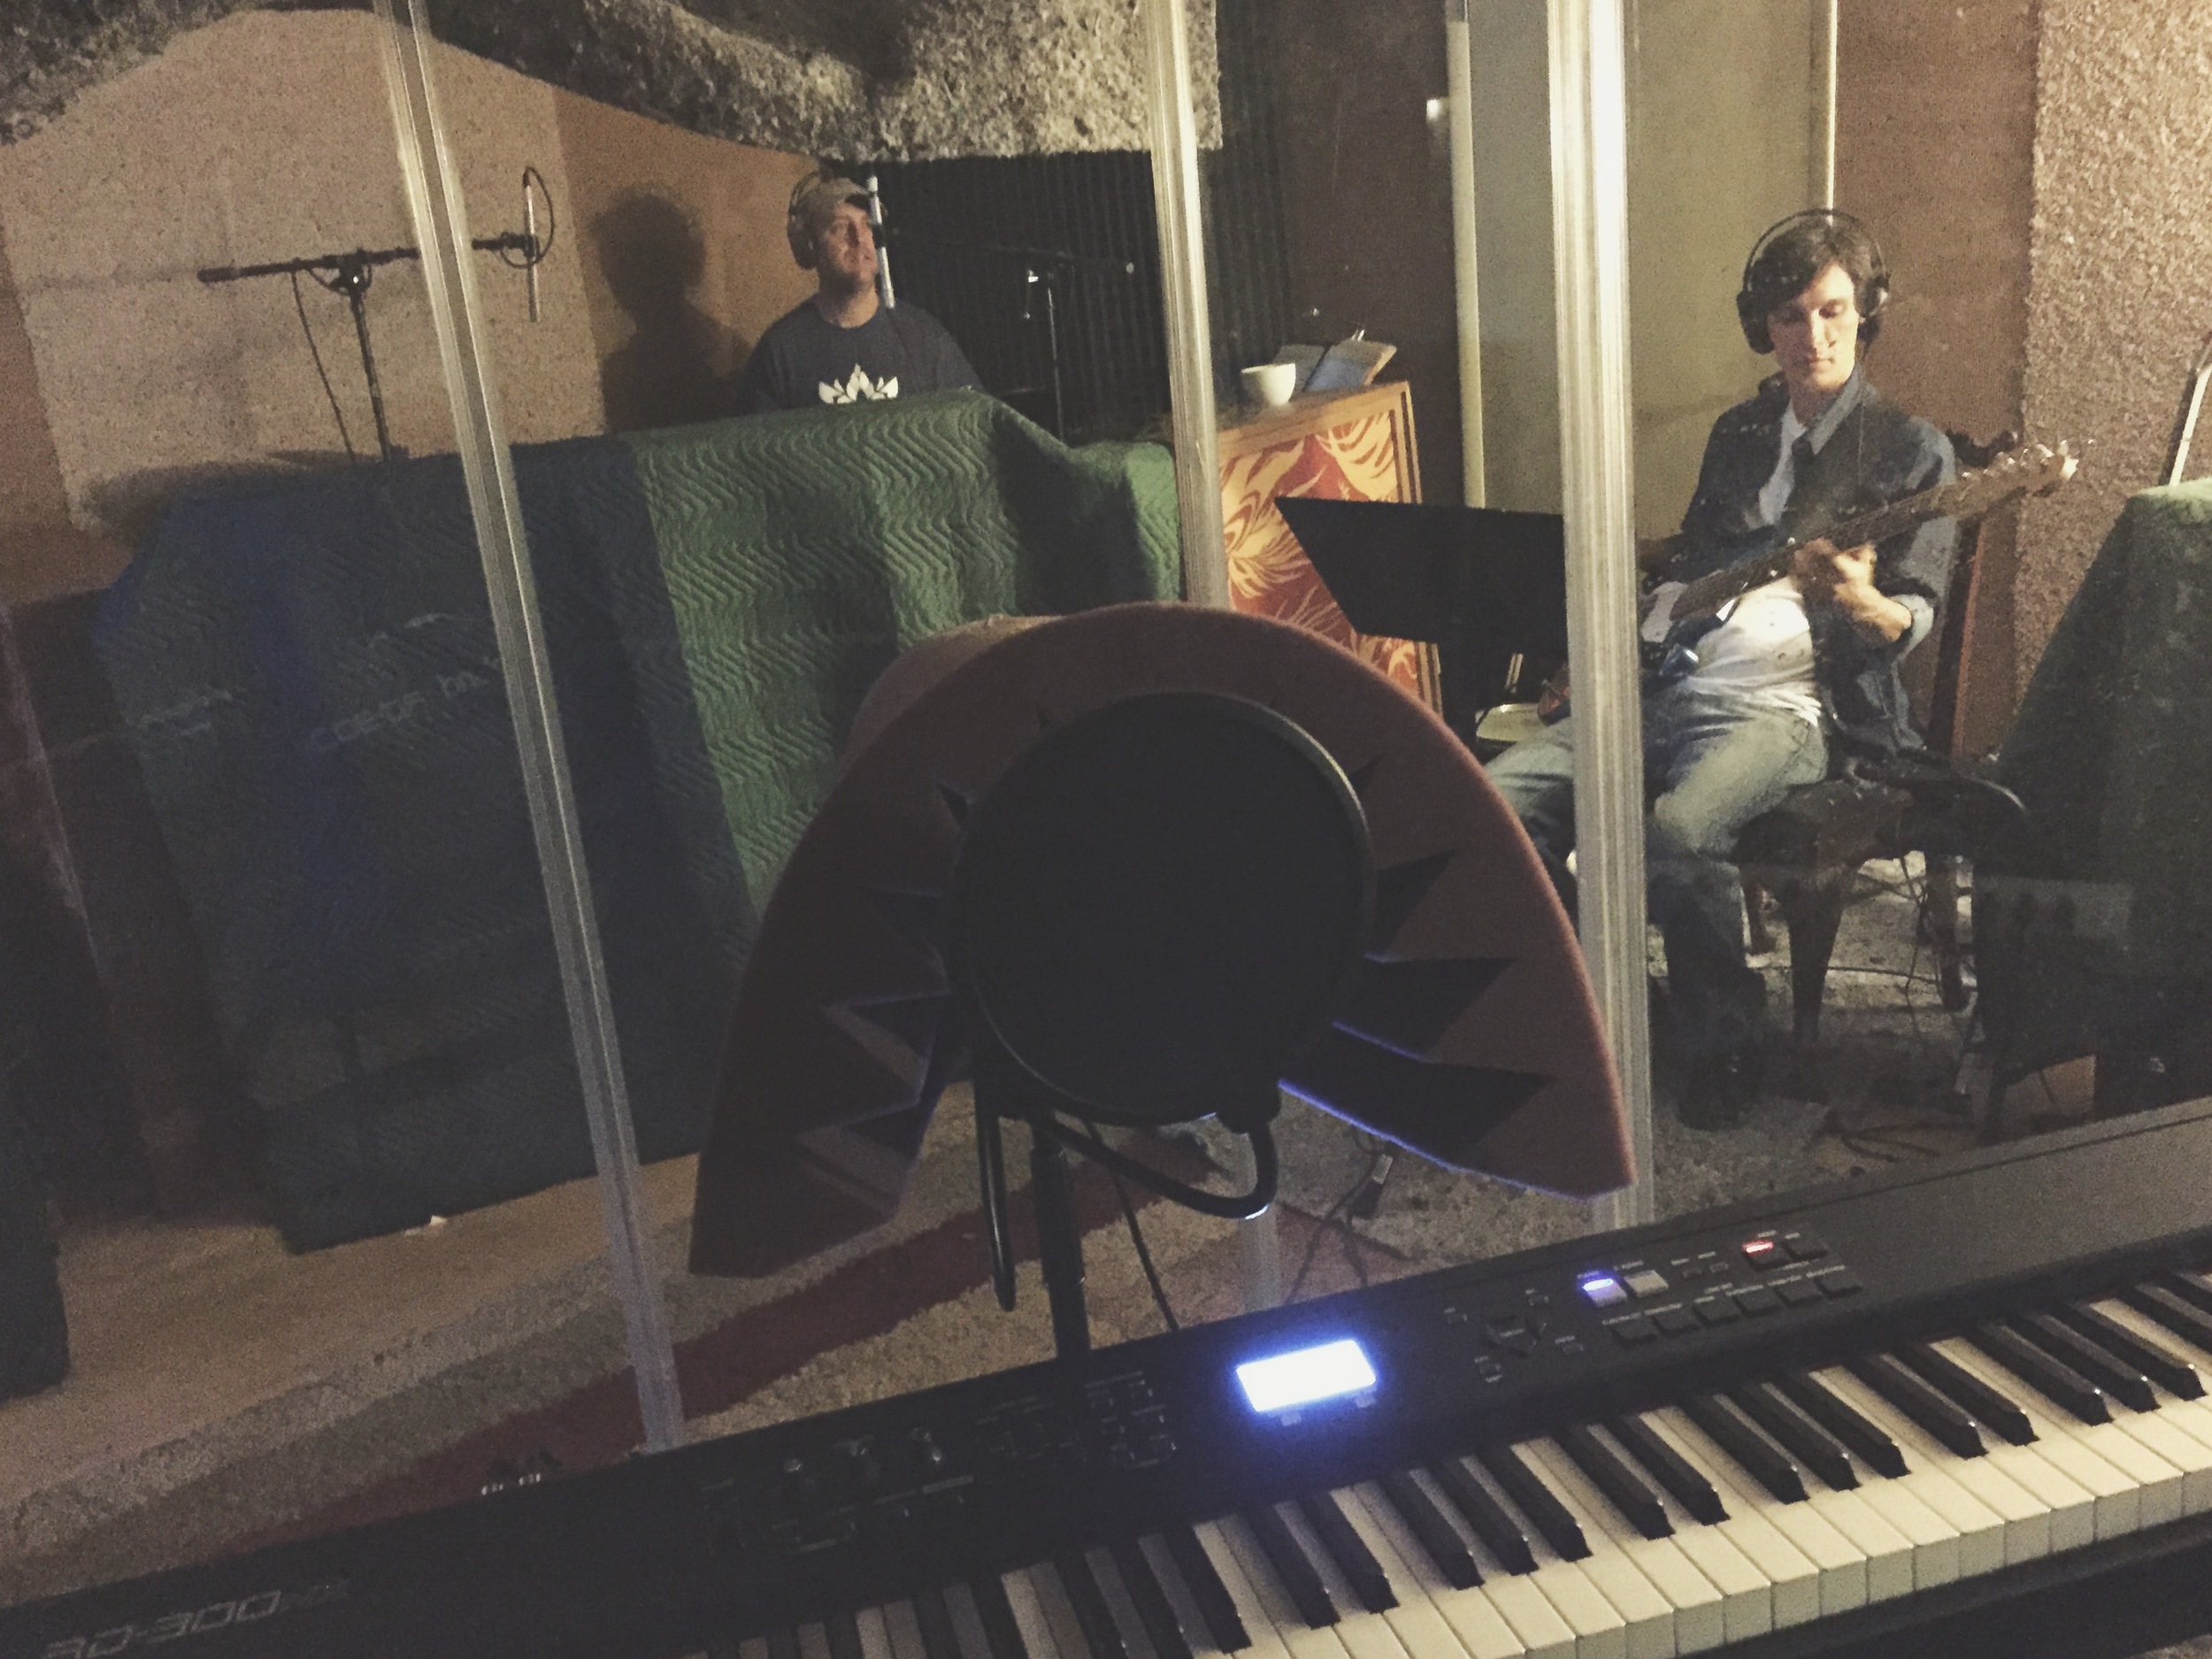 Recording Session